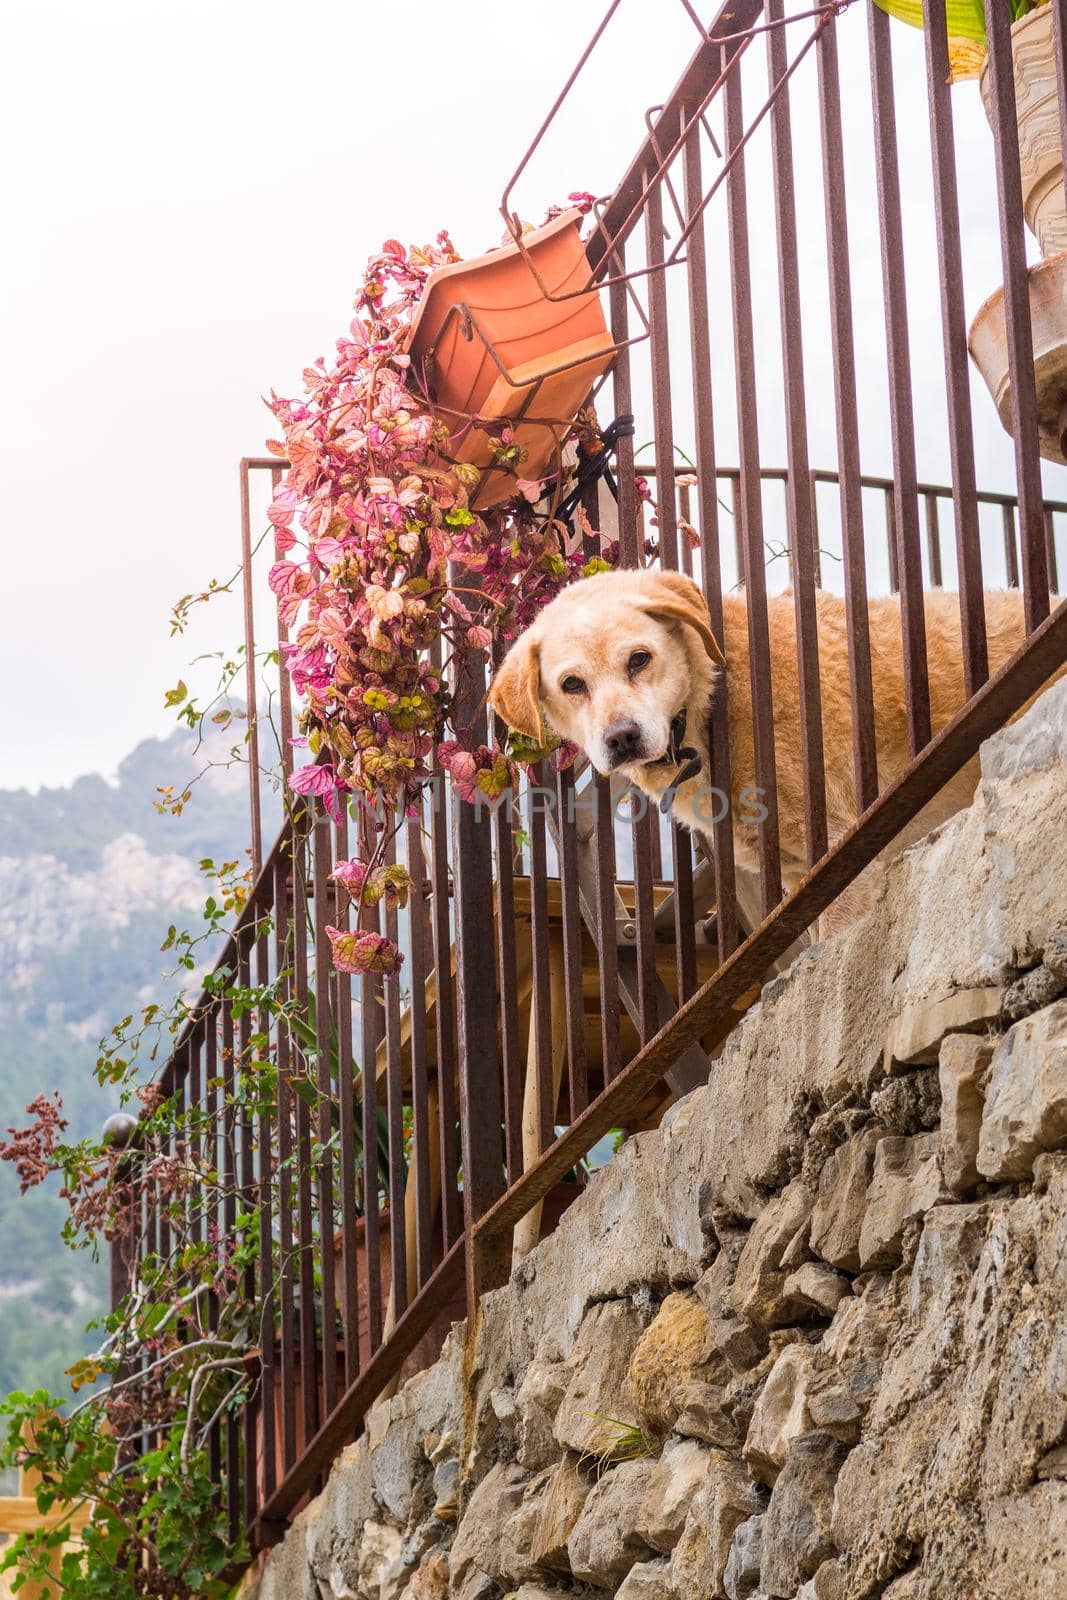 Dog looking trough fence in Banyalbufar (Majorca) by bildgigant